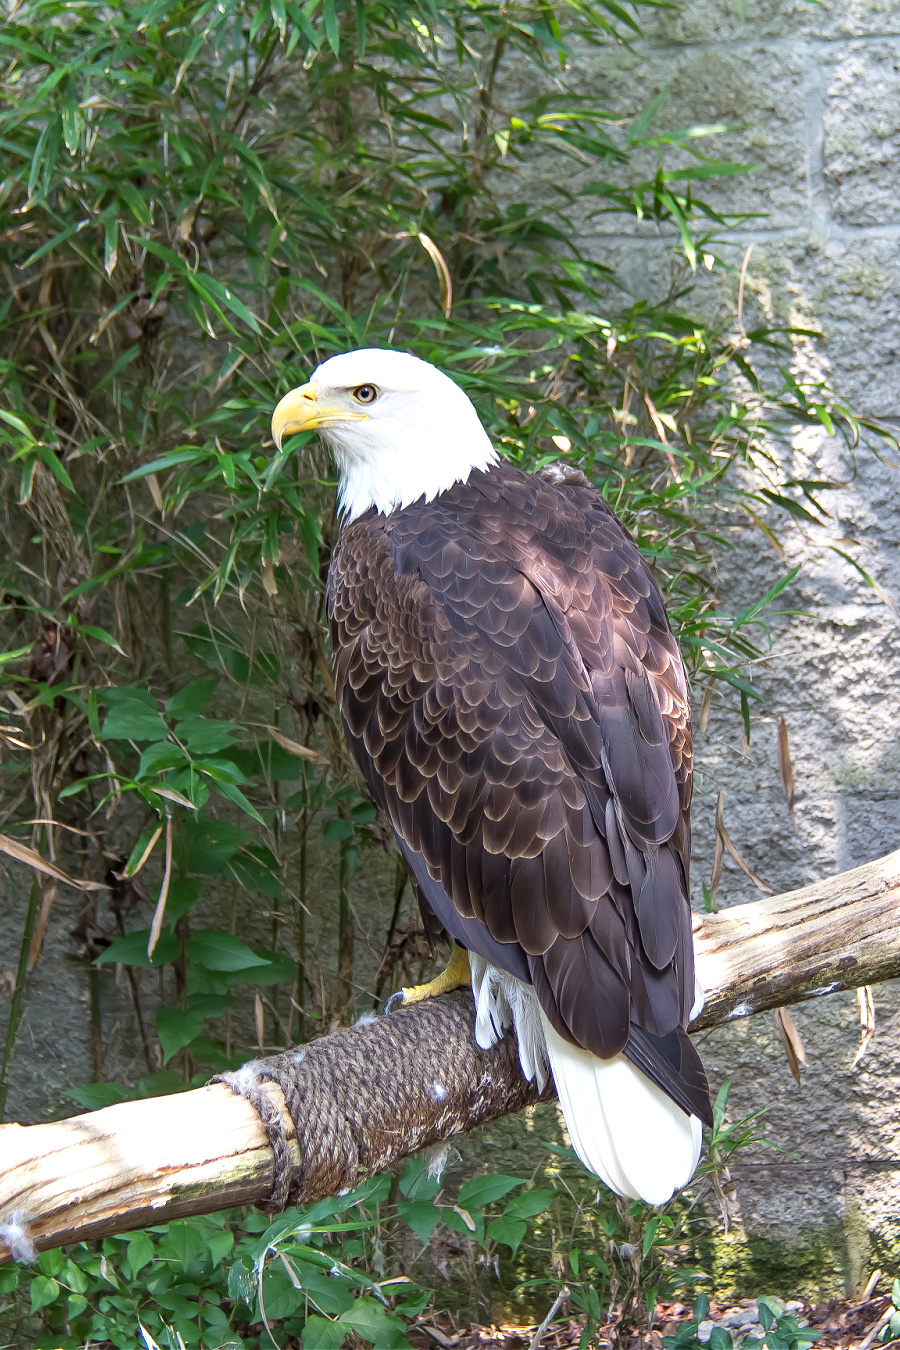 A bald eagle at the Salato Wildlife Center in Frankfort Kentucky.